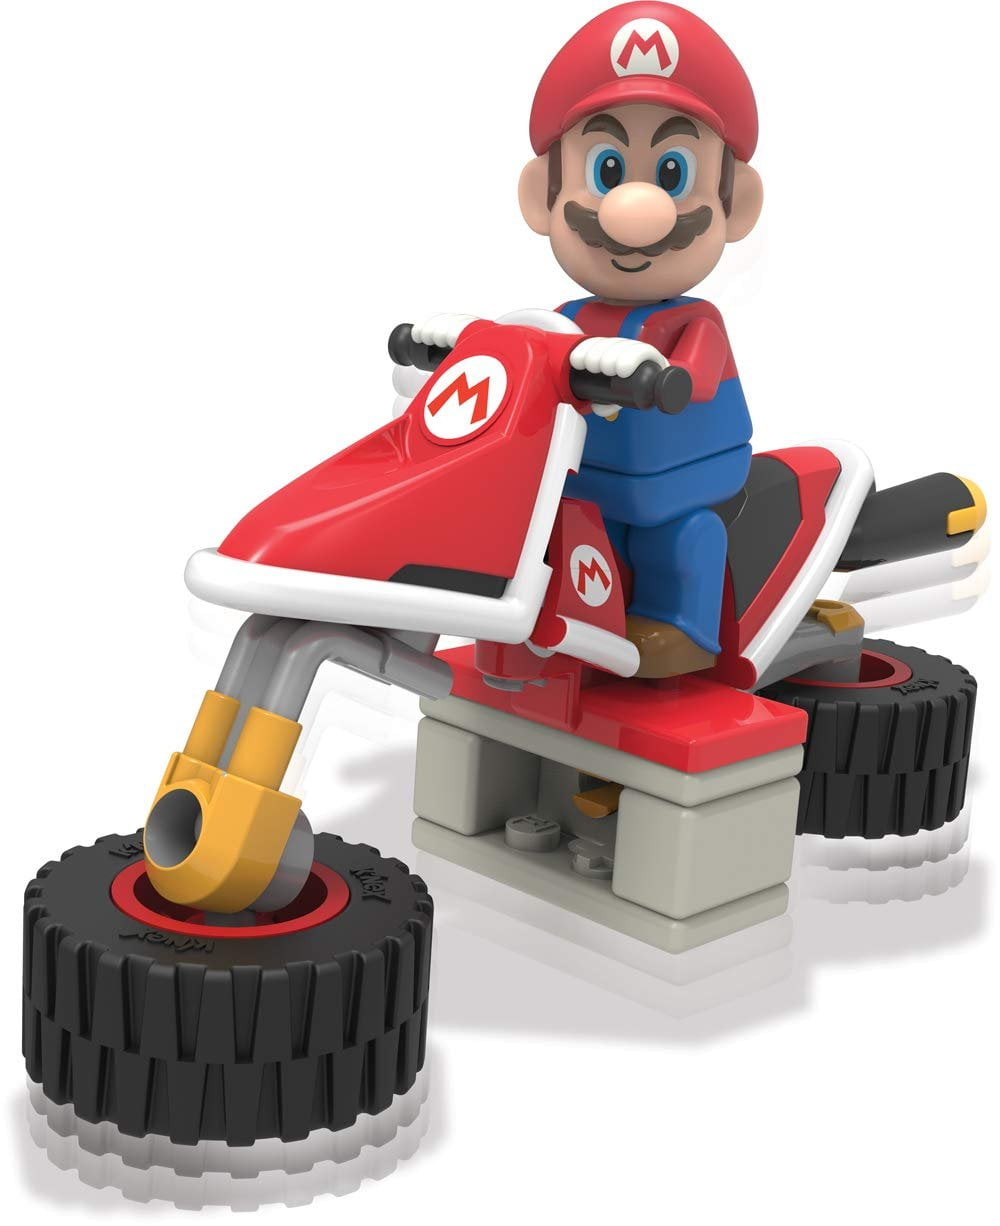 Mario Bike Building Set K'NEX Mario Kart 8 